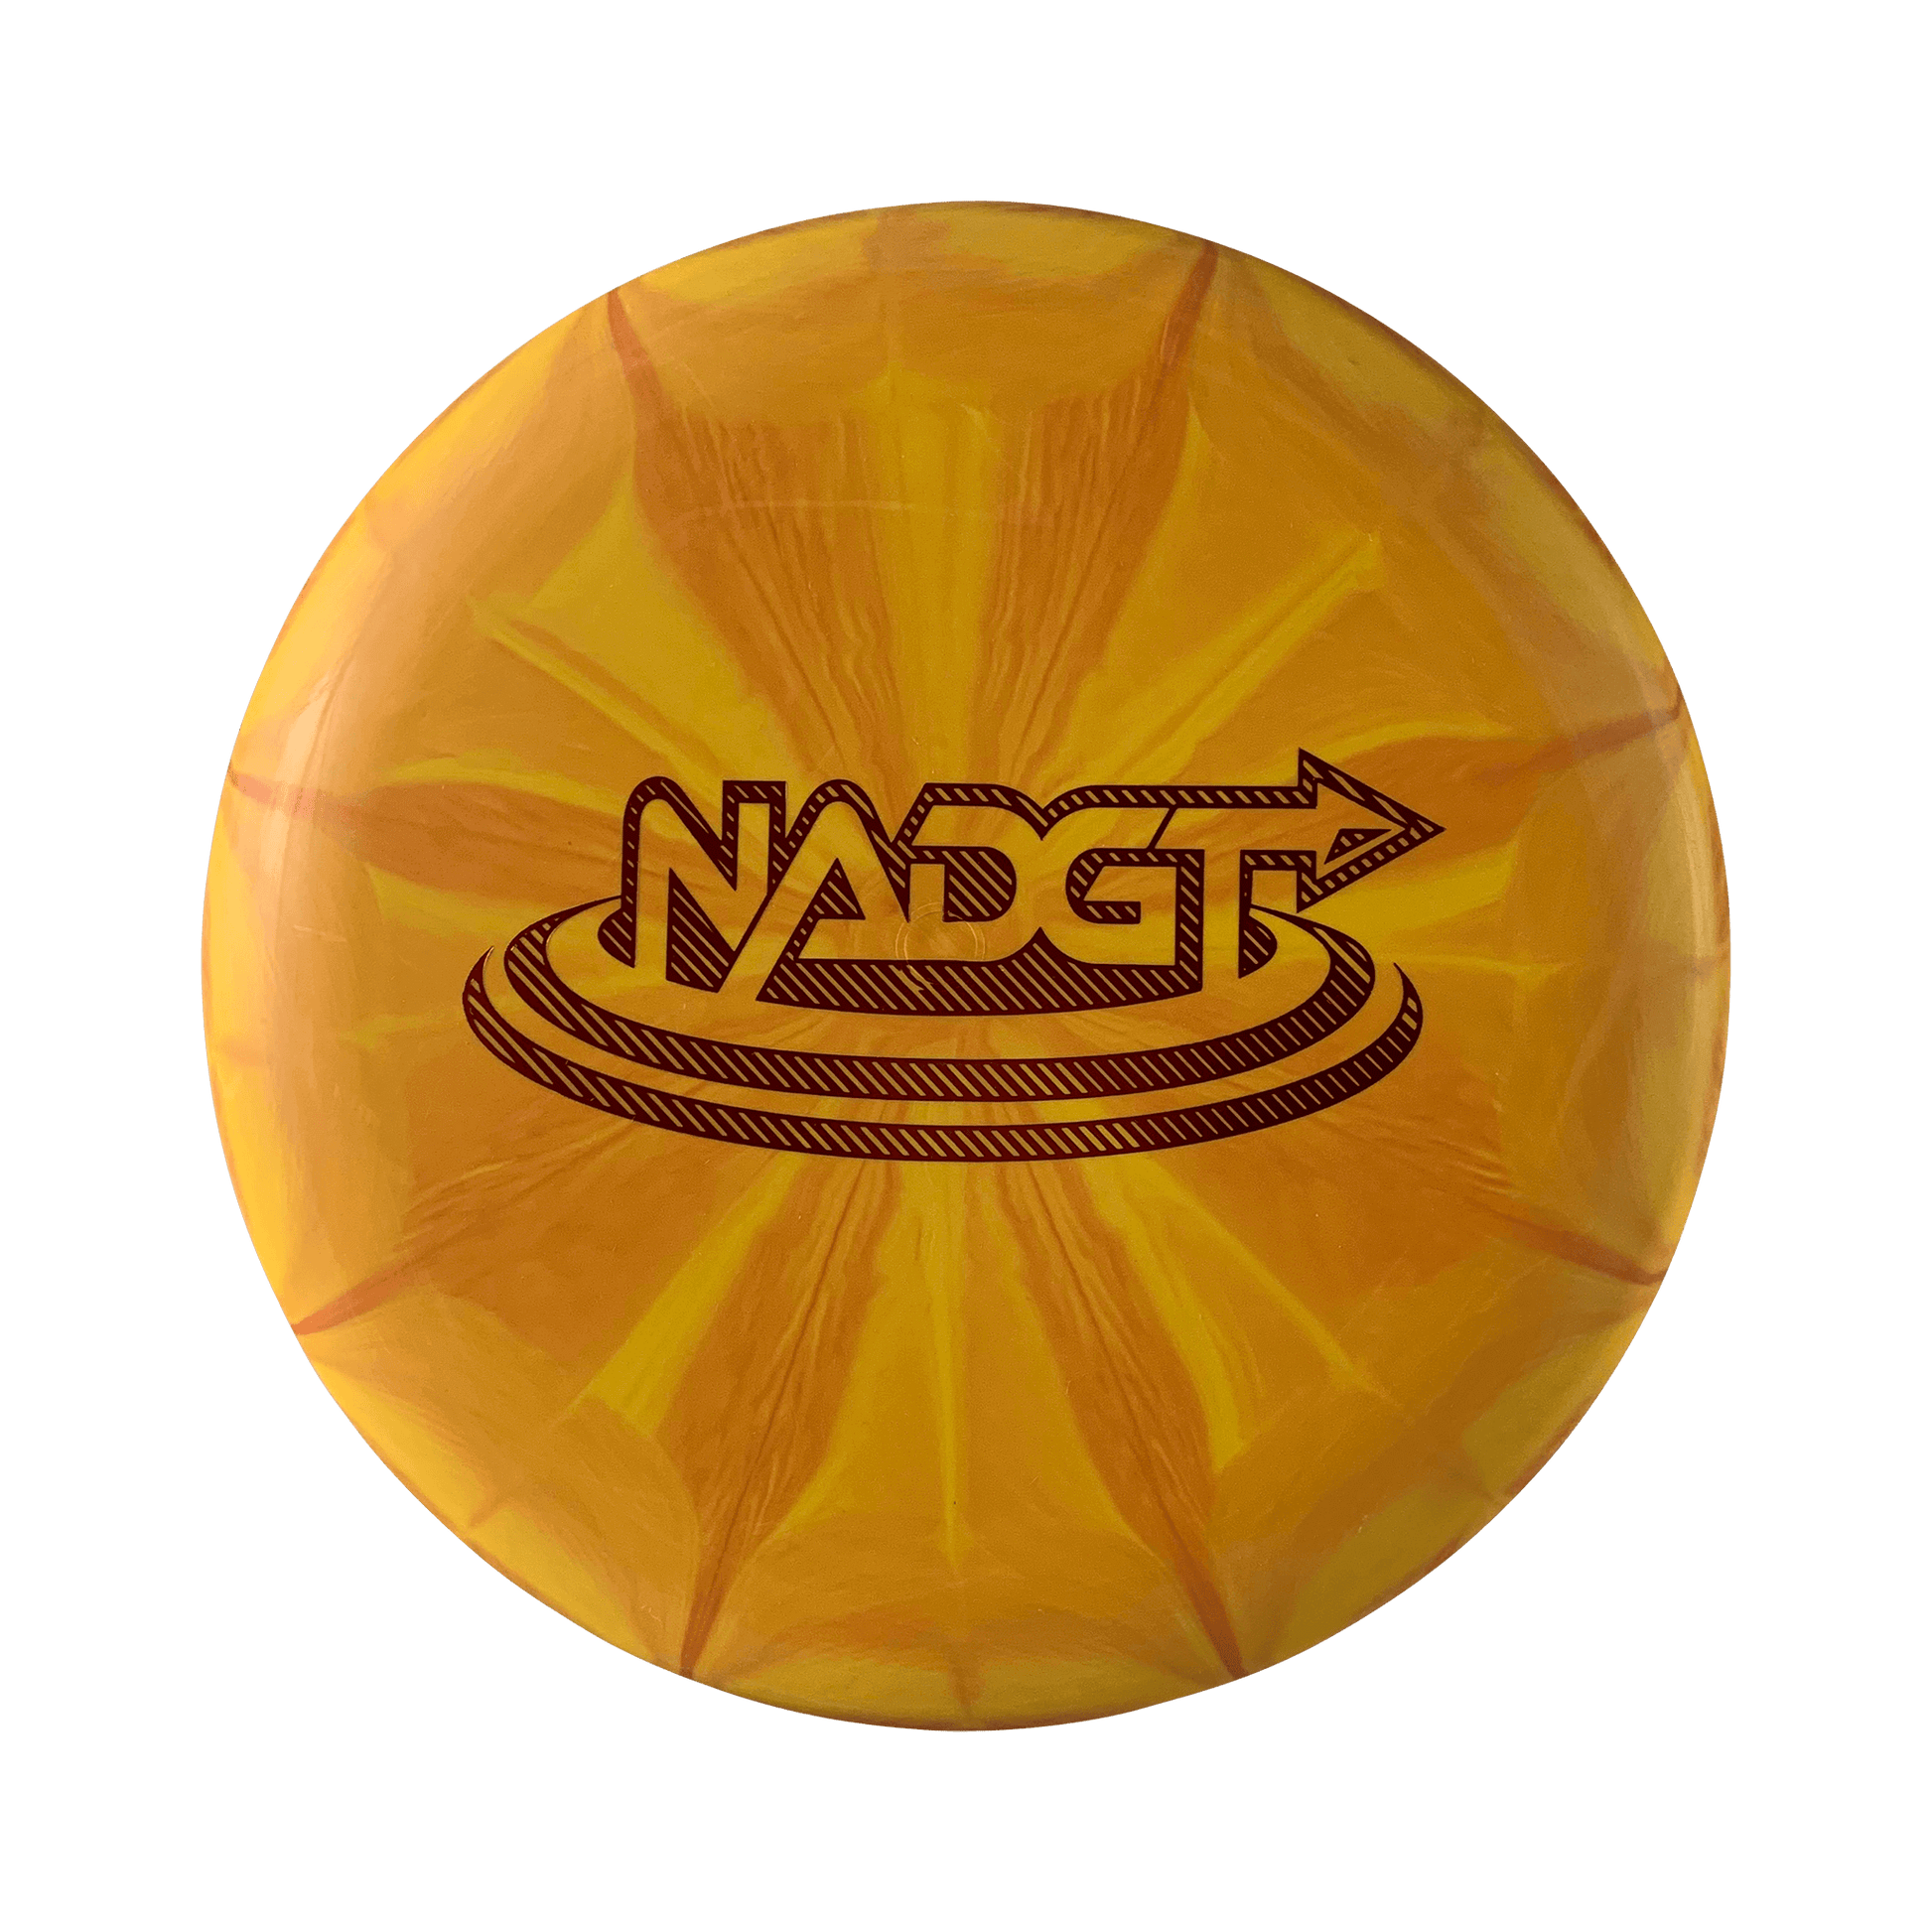 Orgio Burst Swan 1 Reborn - NADGT Stamp Disc Westside Discs tigers eye 173 